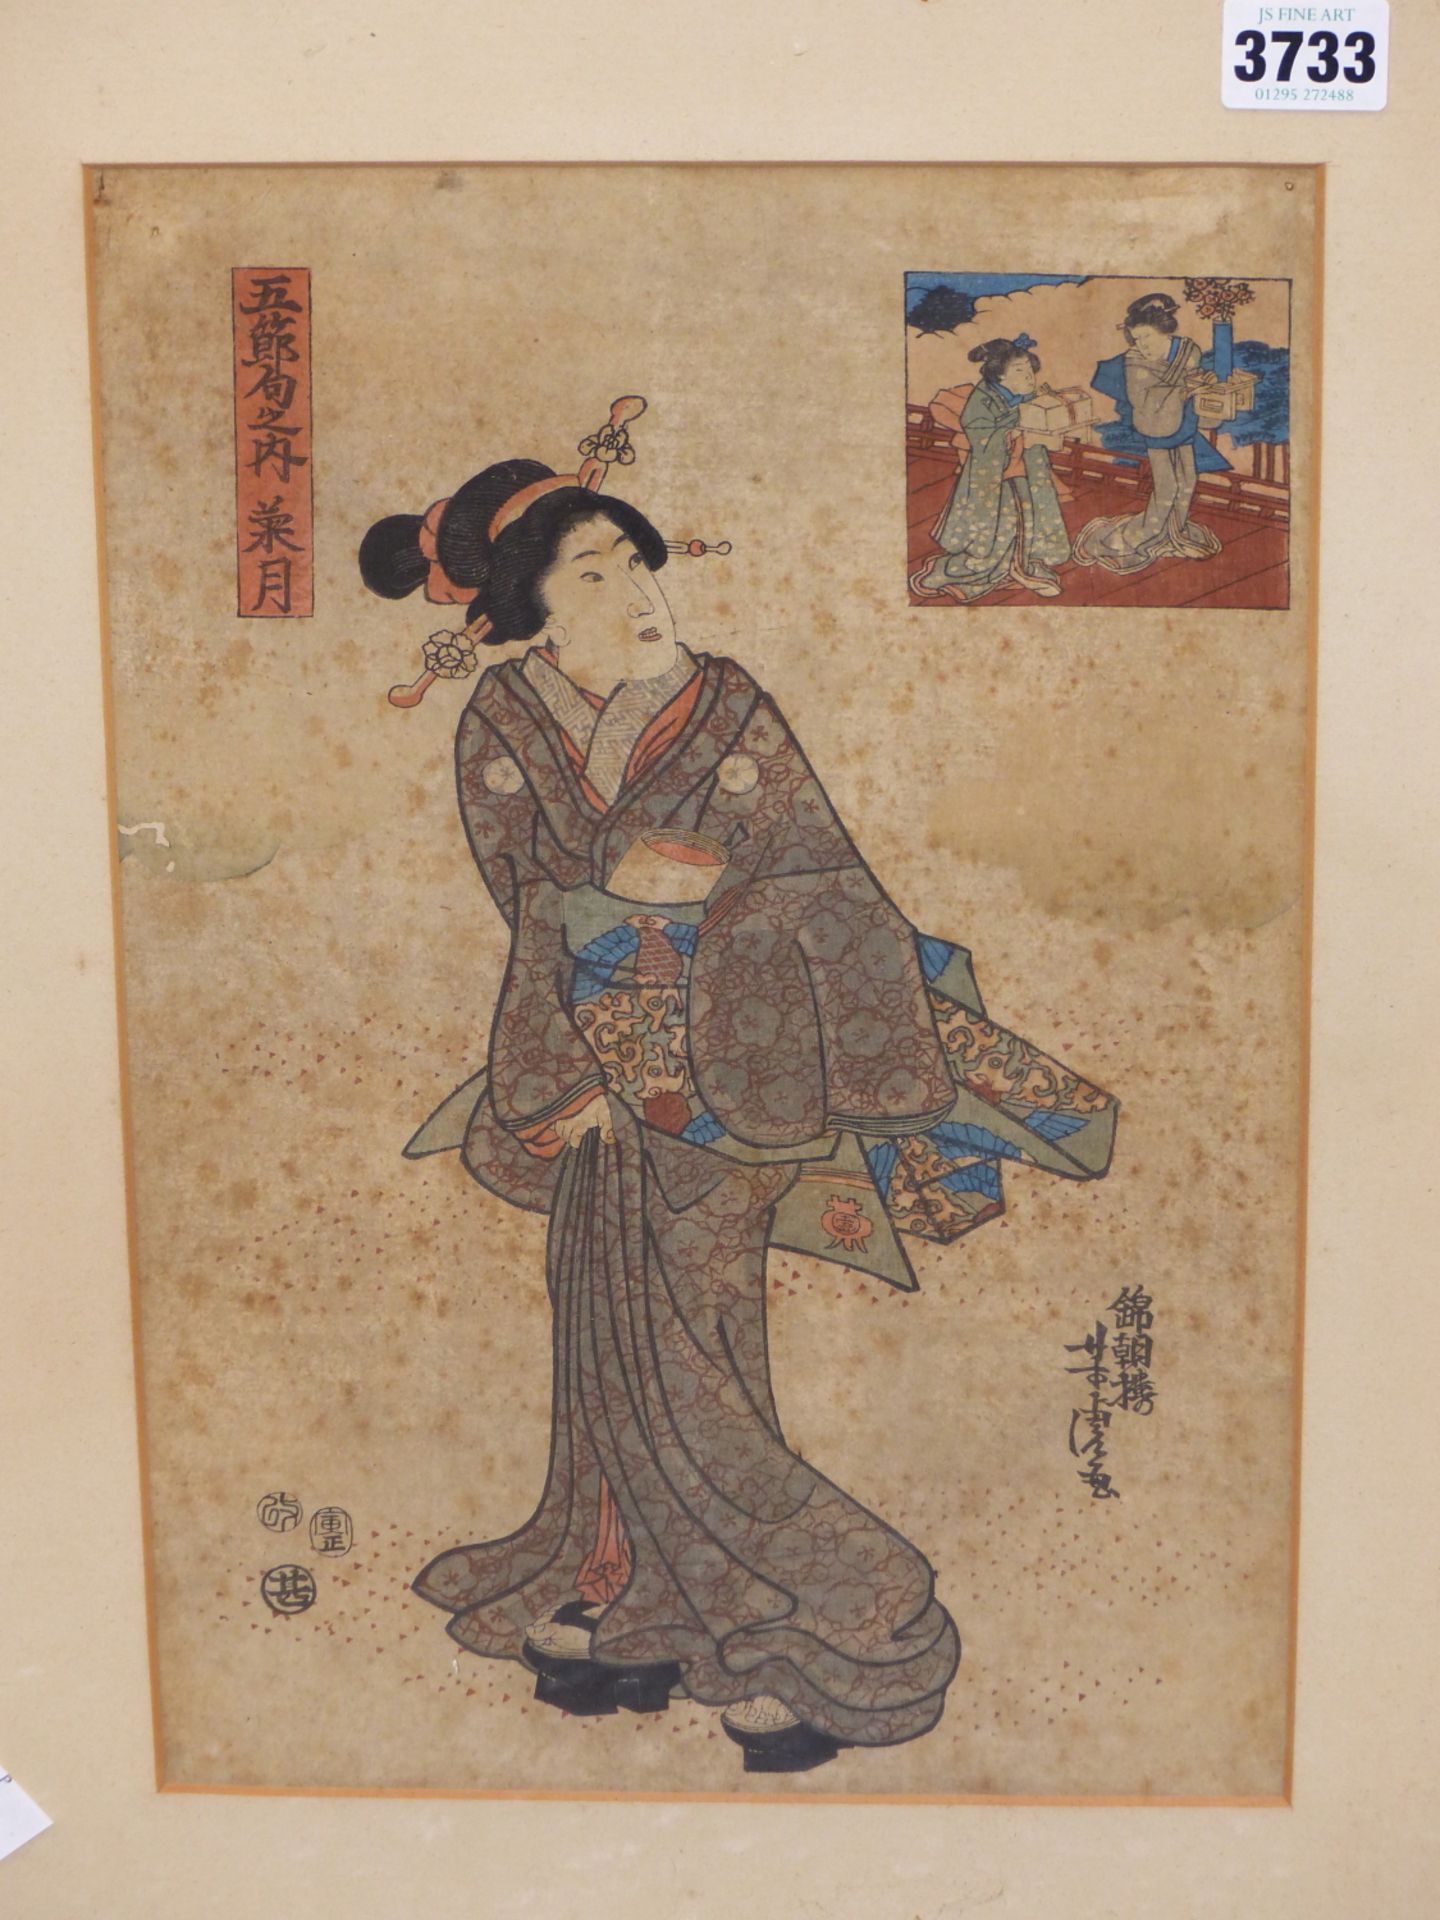 YOSHITORA (19TH CENTURY JAPANESE) WOODBLOCK PRINT. 23 X 35 cm. - Image 2 of 5